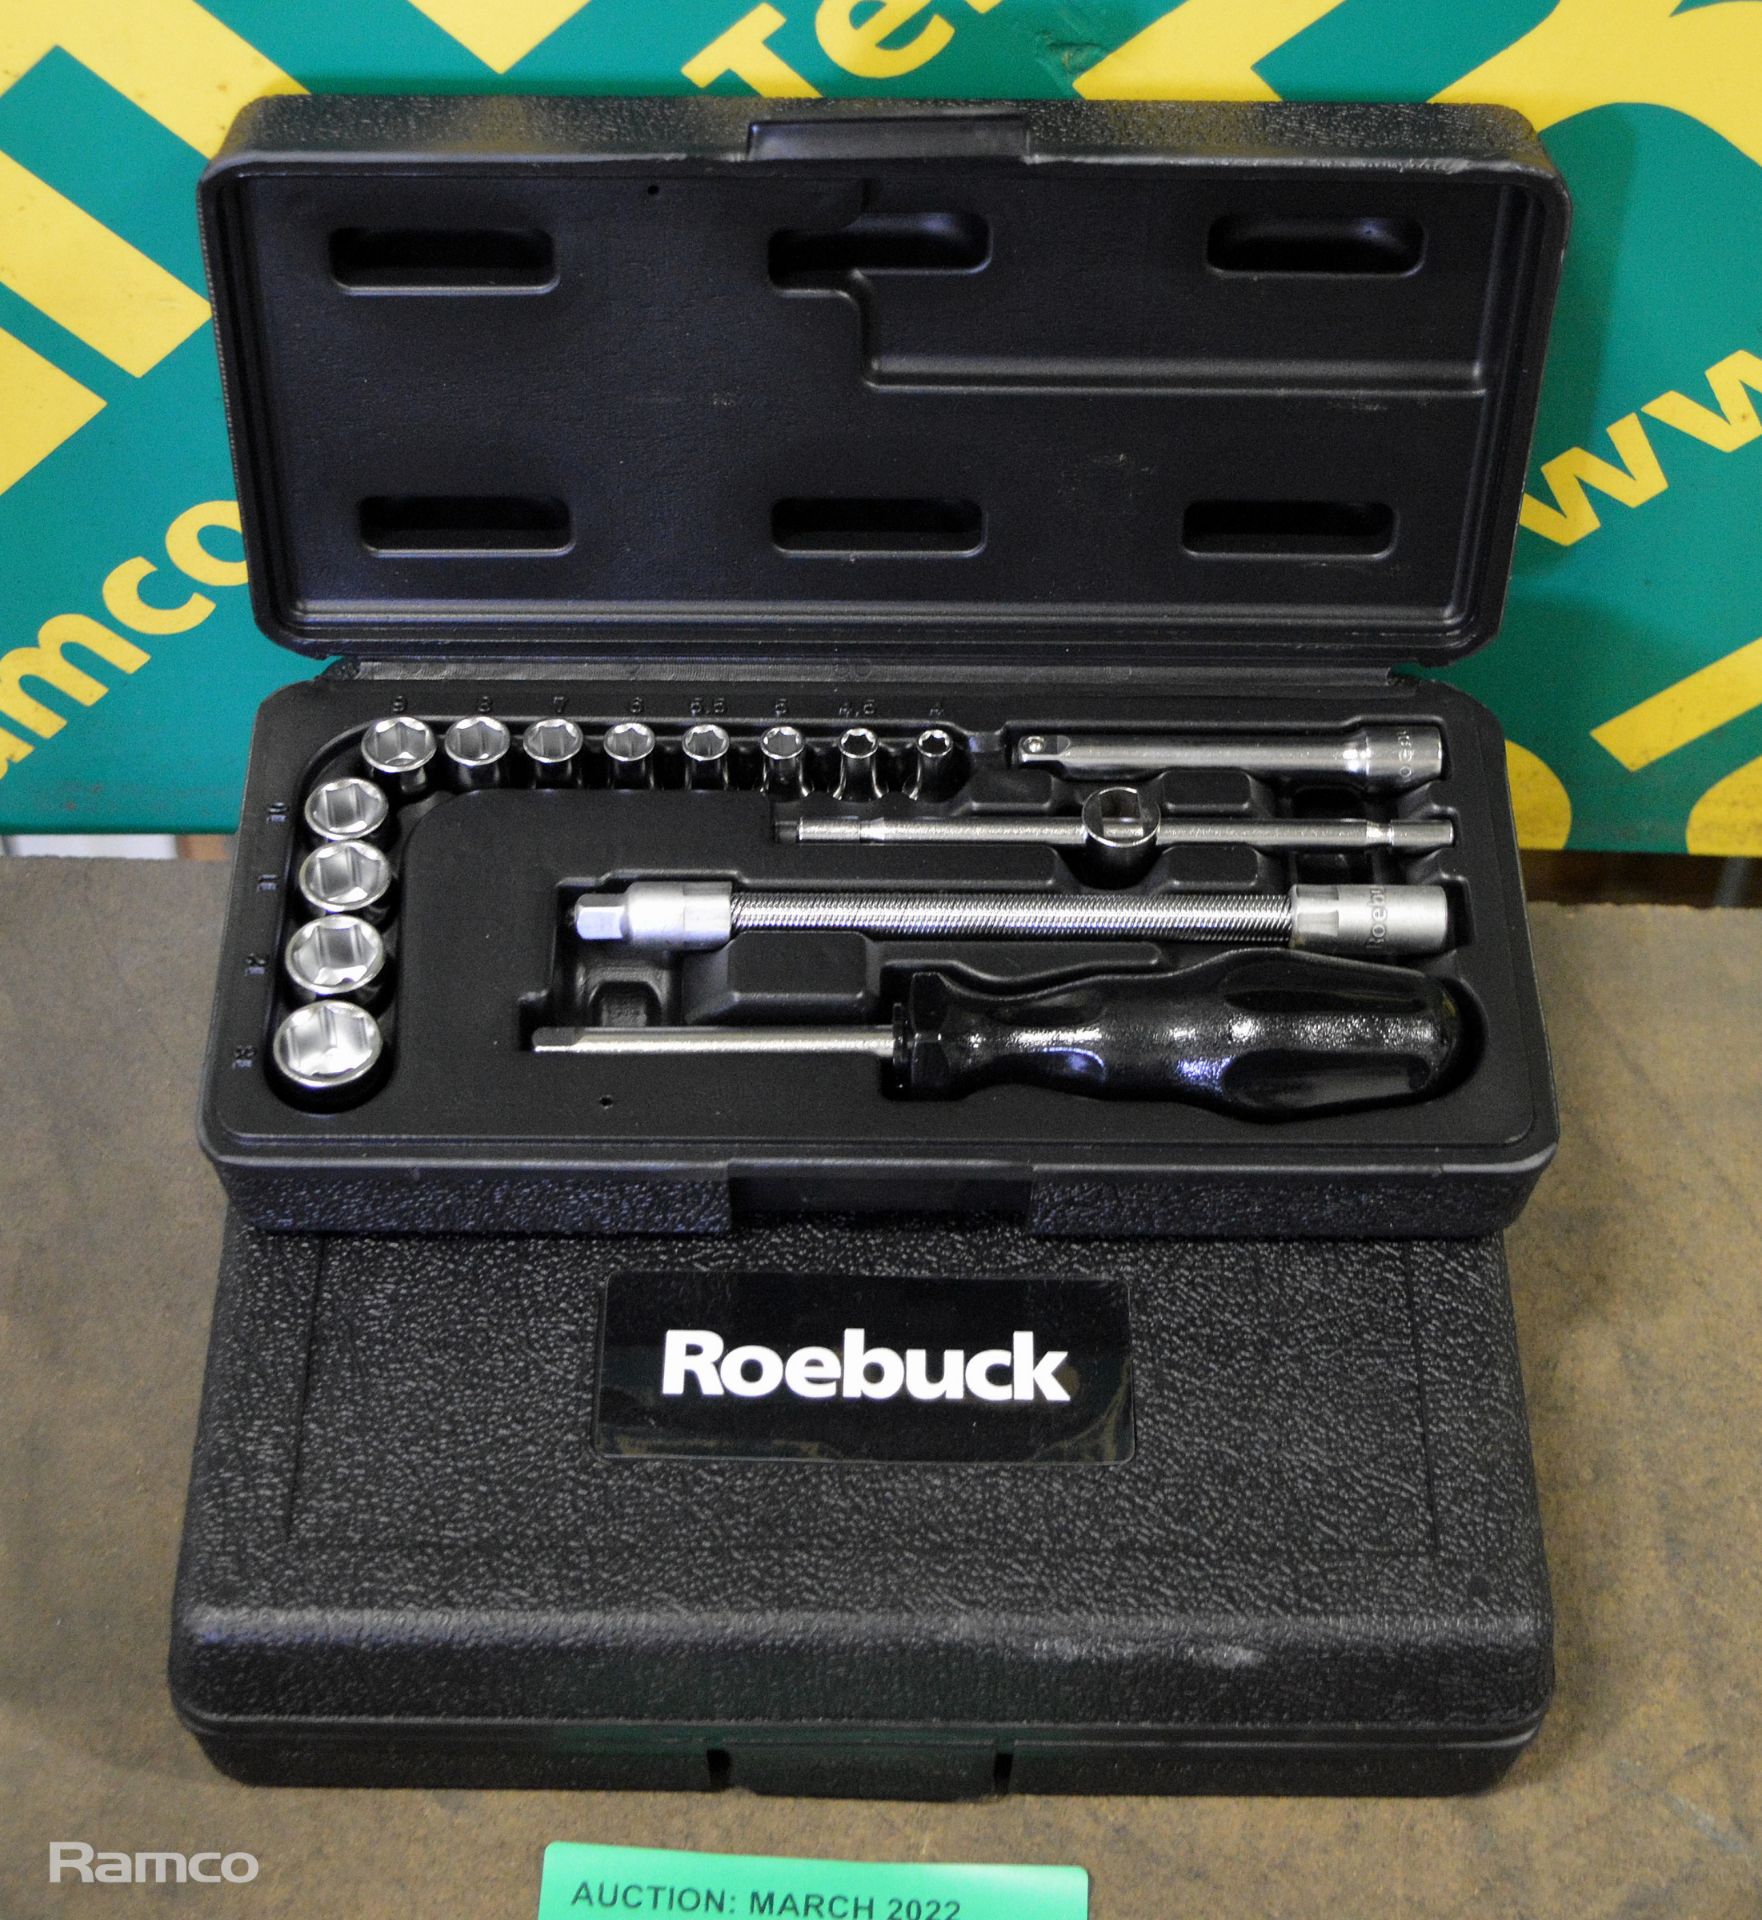 3x Roebuck socket sets in cases